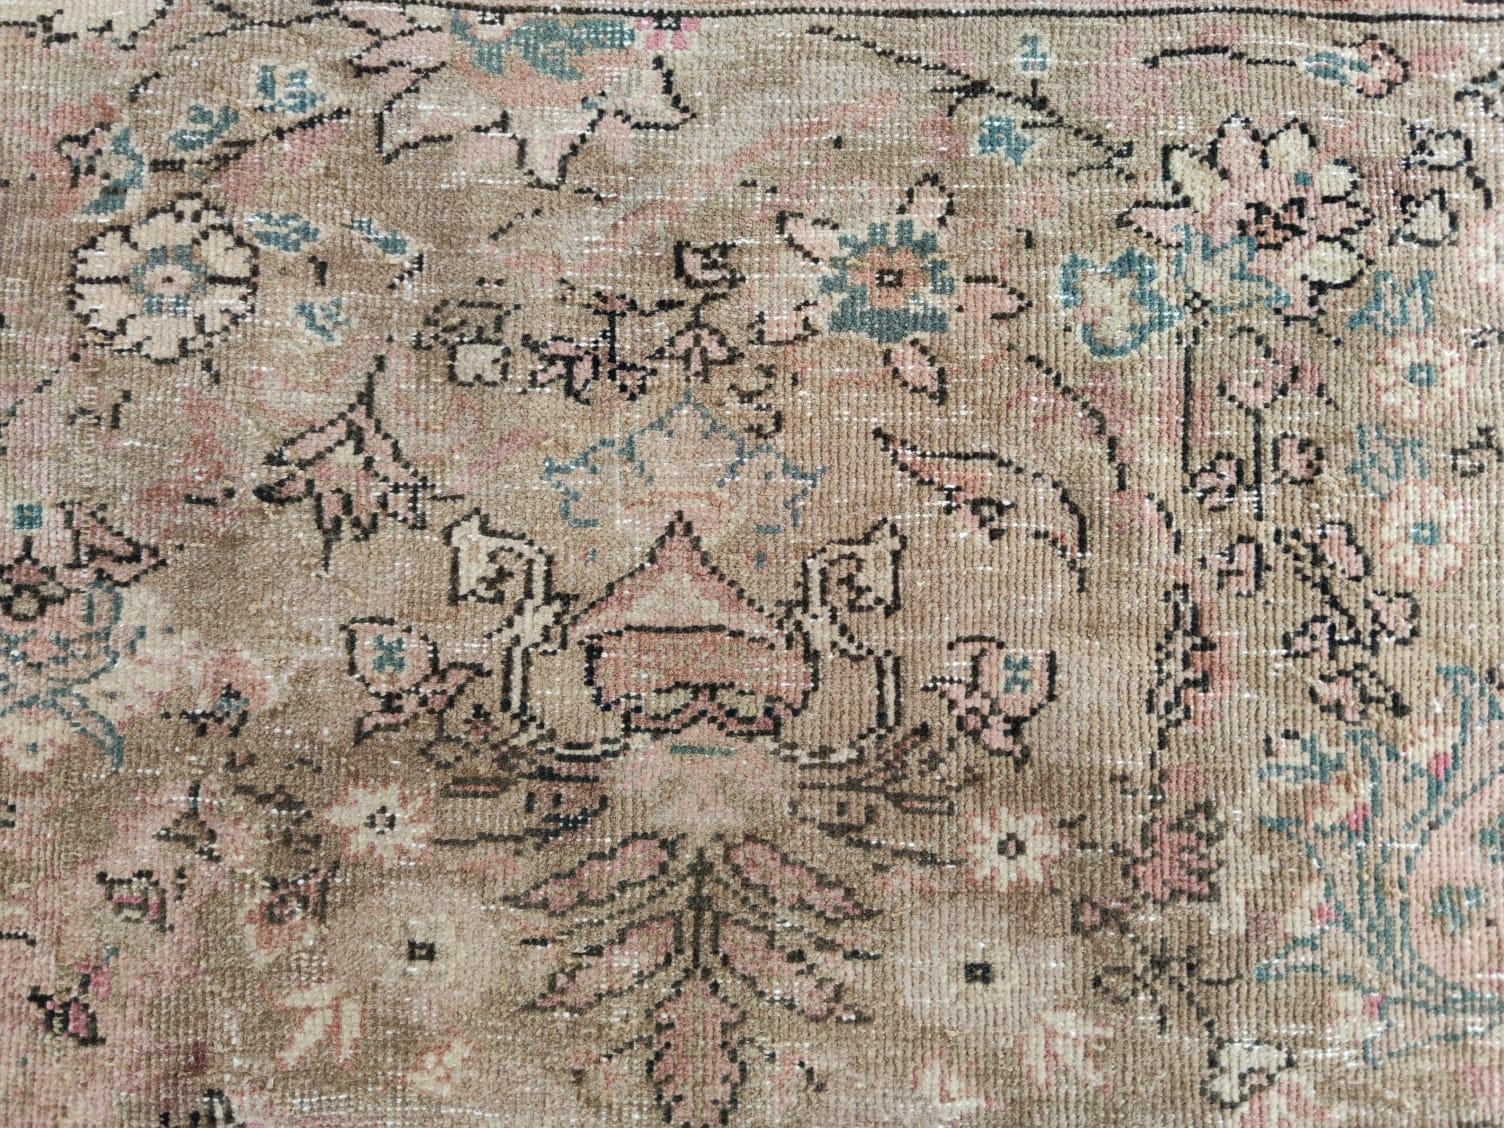 8.5x11 Ft Vintage Handmade Floral Pattern Turkish Wool Area Rug in Tawny Brown 5